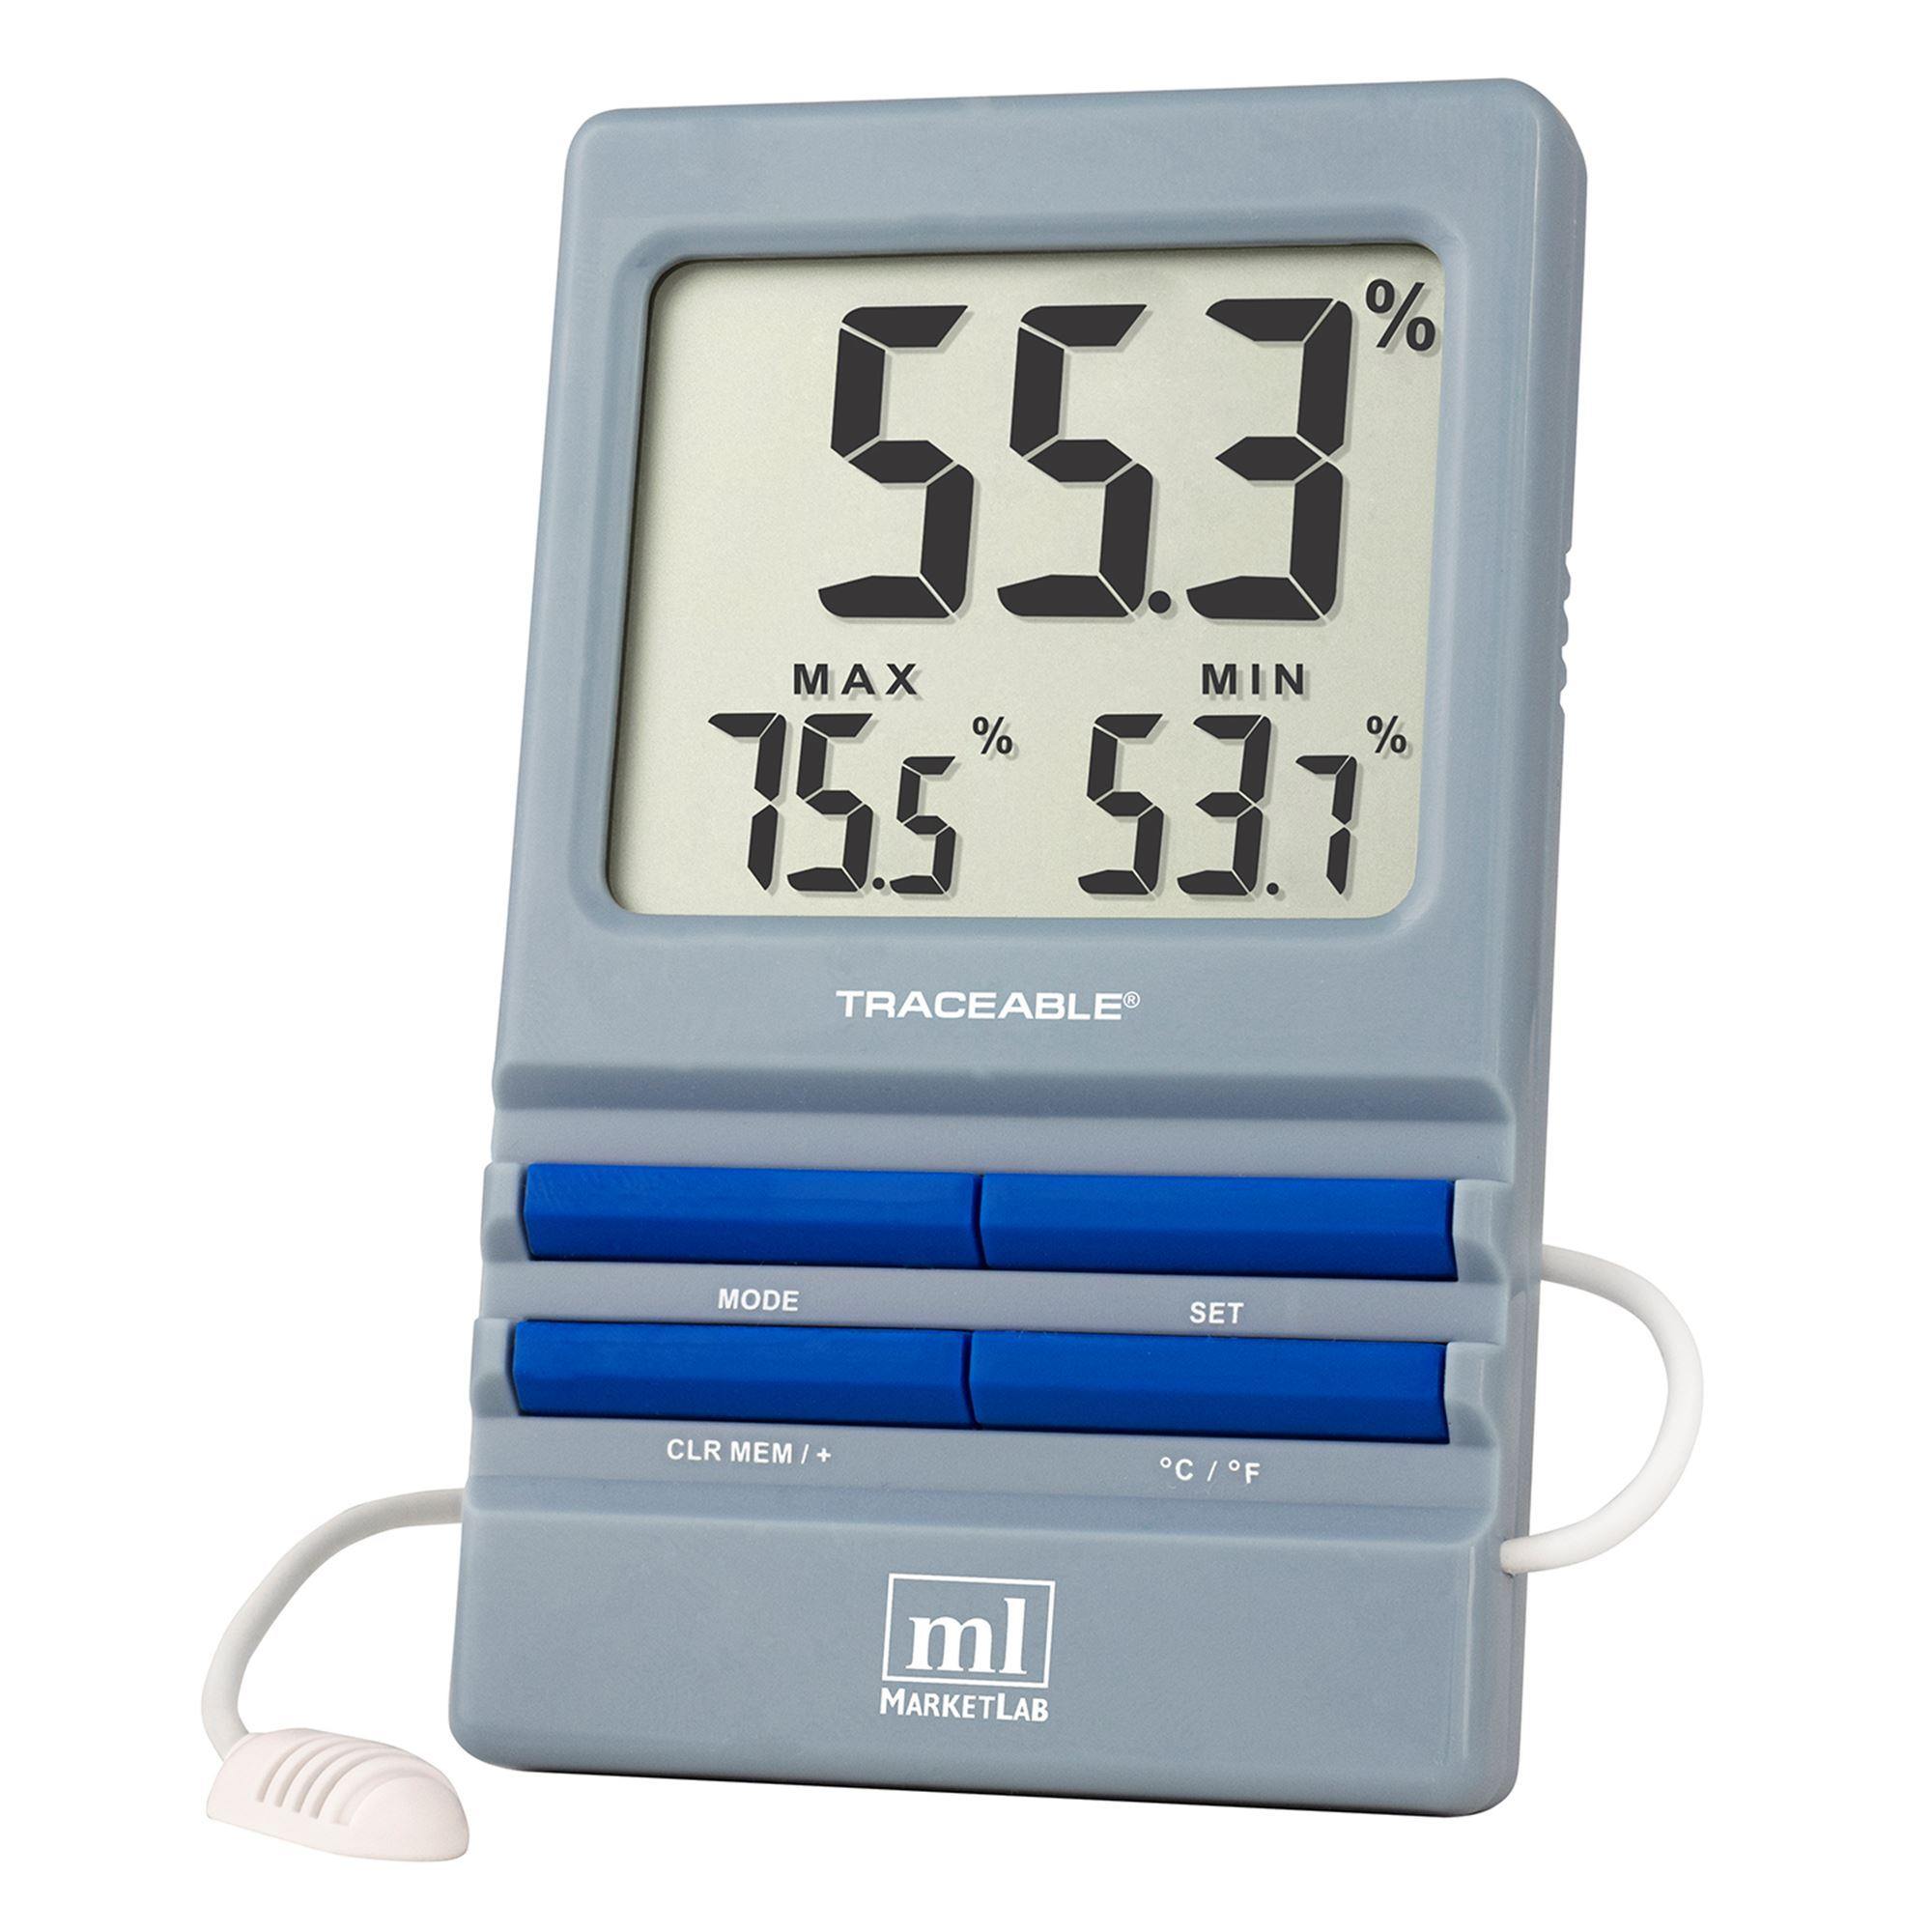 Remote Alarm RH-Temp Monitor Remote Alarm RH/Temp Monitor • 4.25"W x 0.75"D x 2.75"H ,1 Each - Axiom Medical Supplies